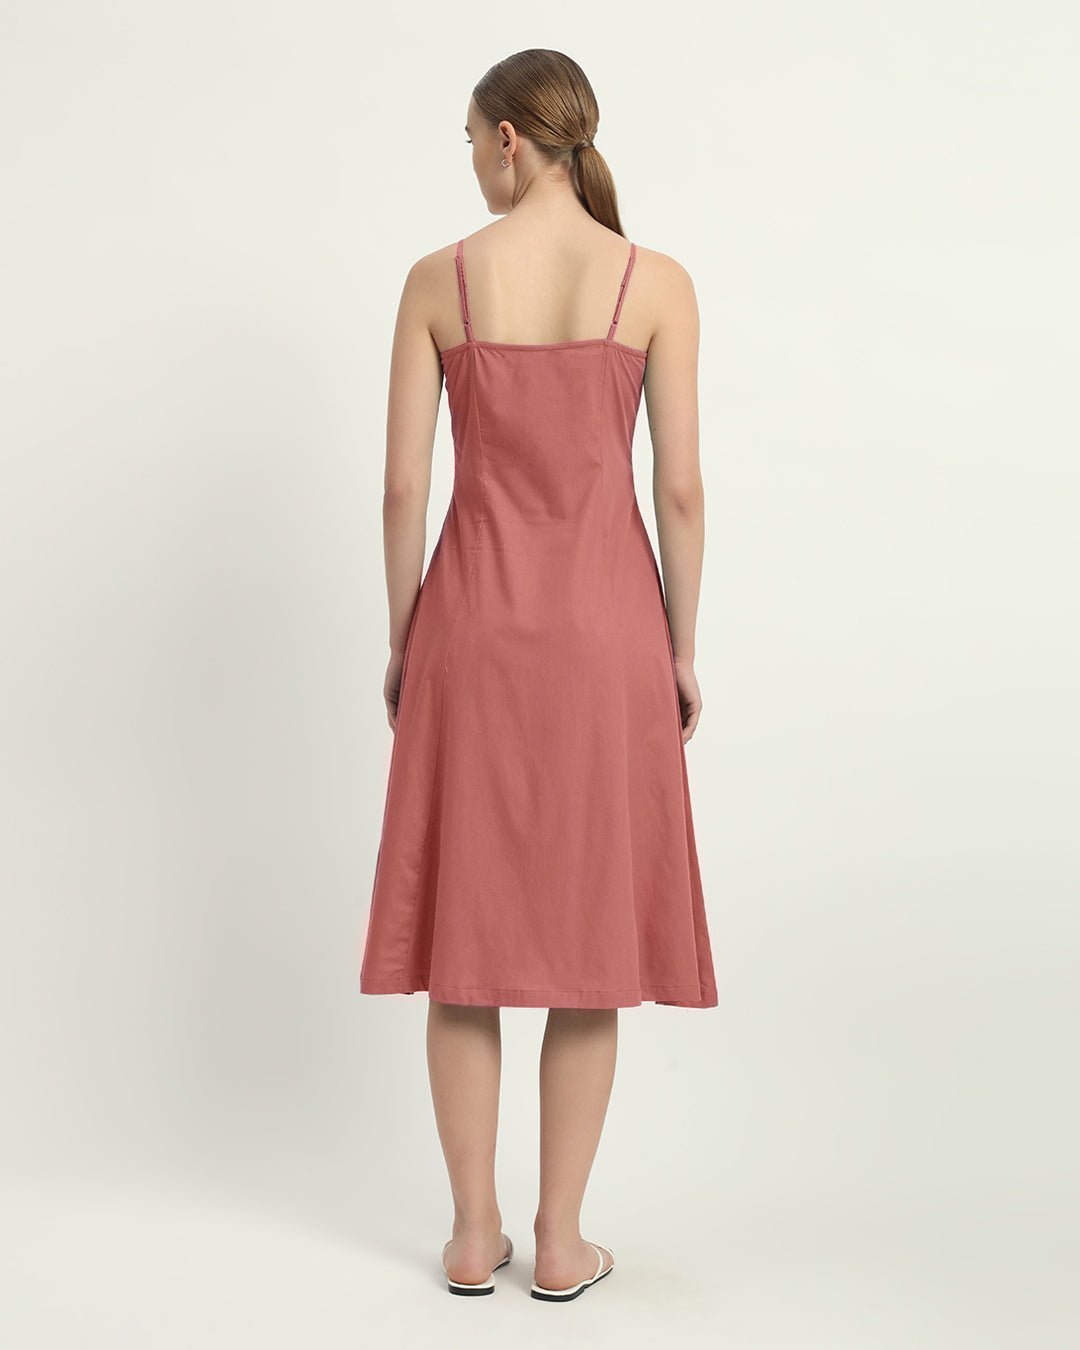 The Valatie  Ivory Pink Cotton Dress